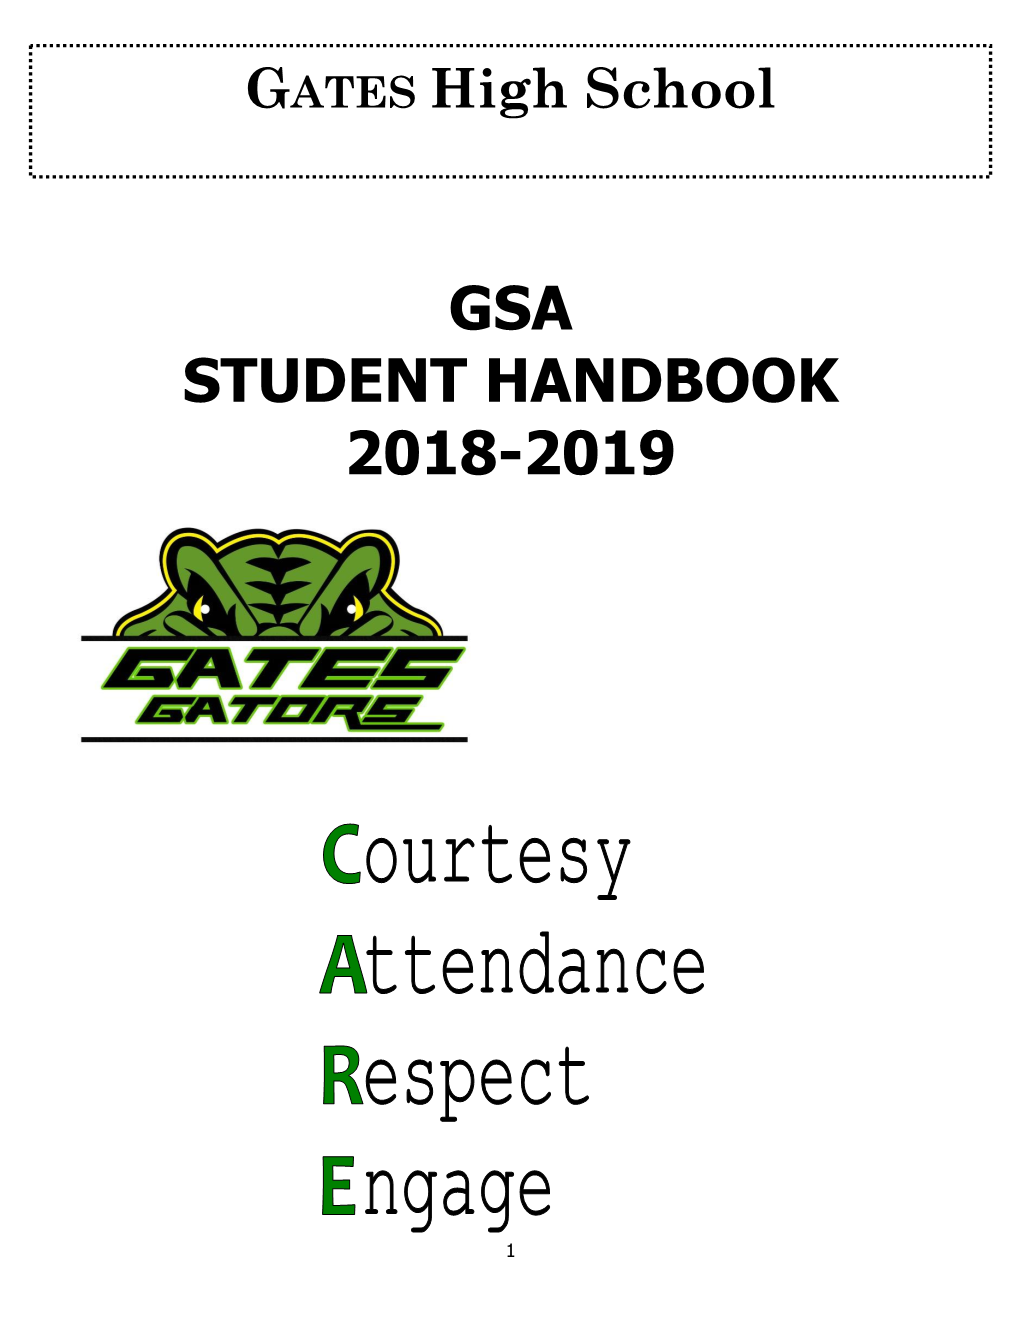 Gsa Student Handbook 2018-2019